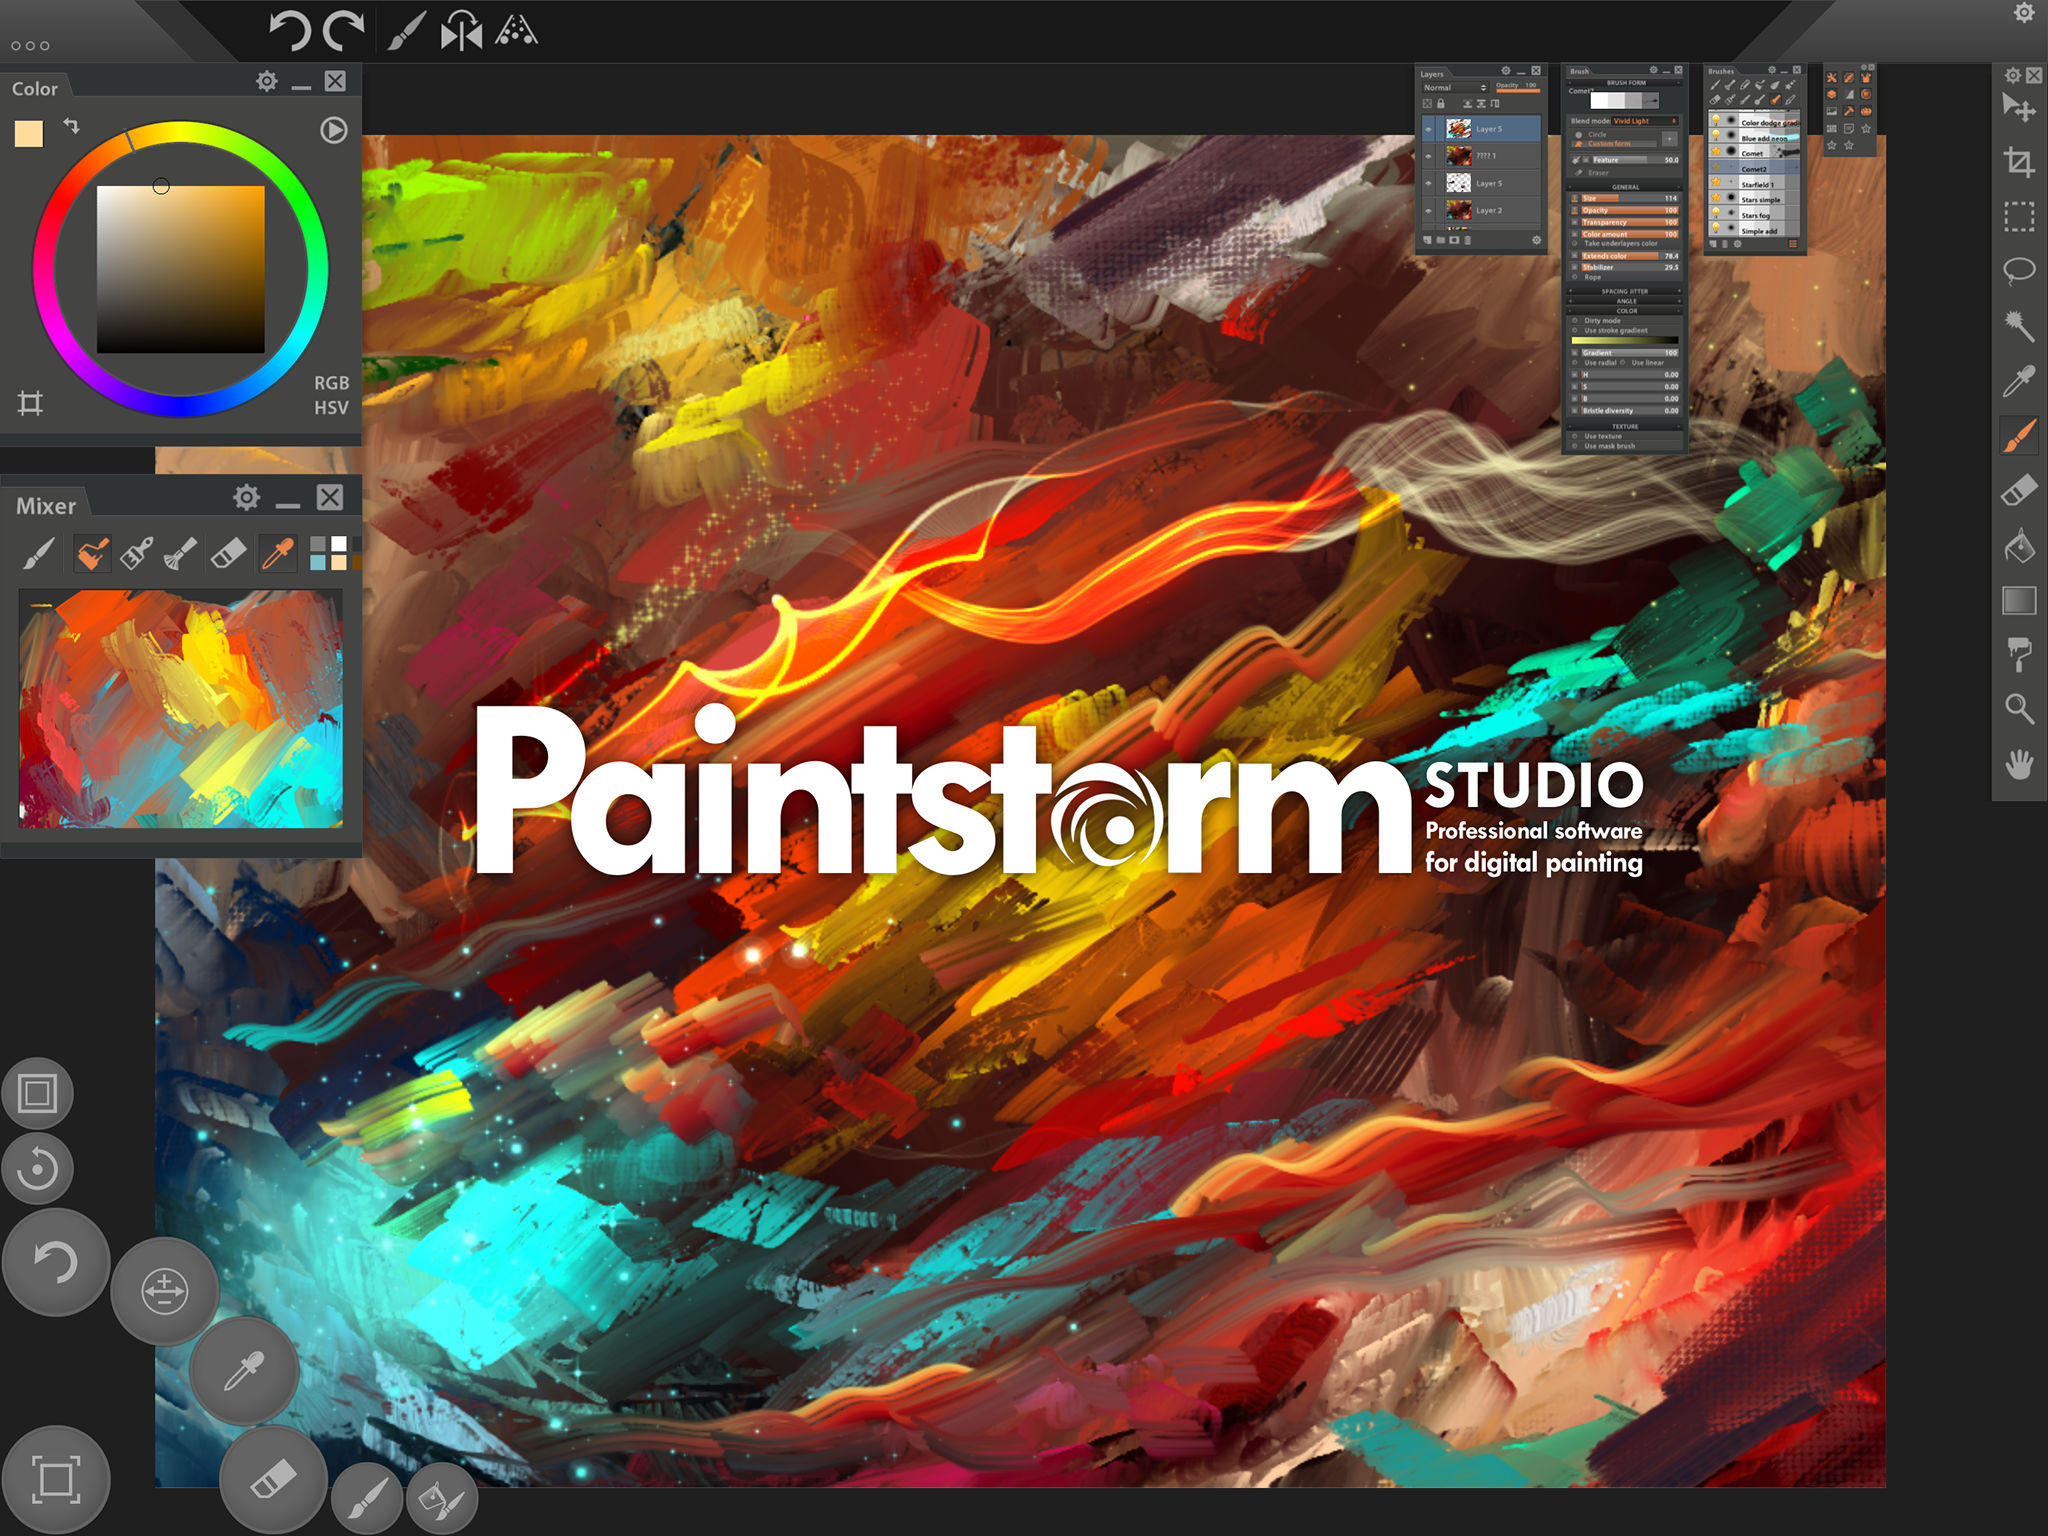 Paint Storm Studio